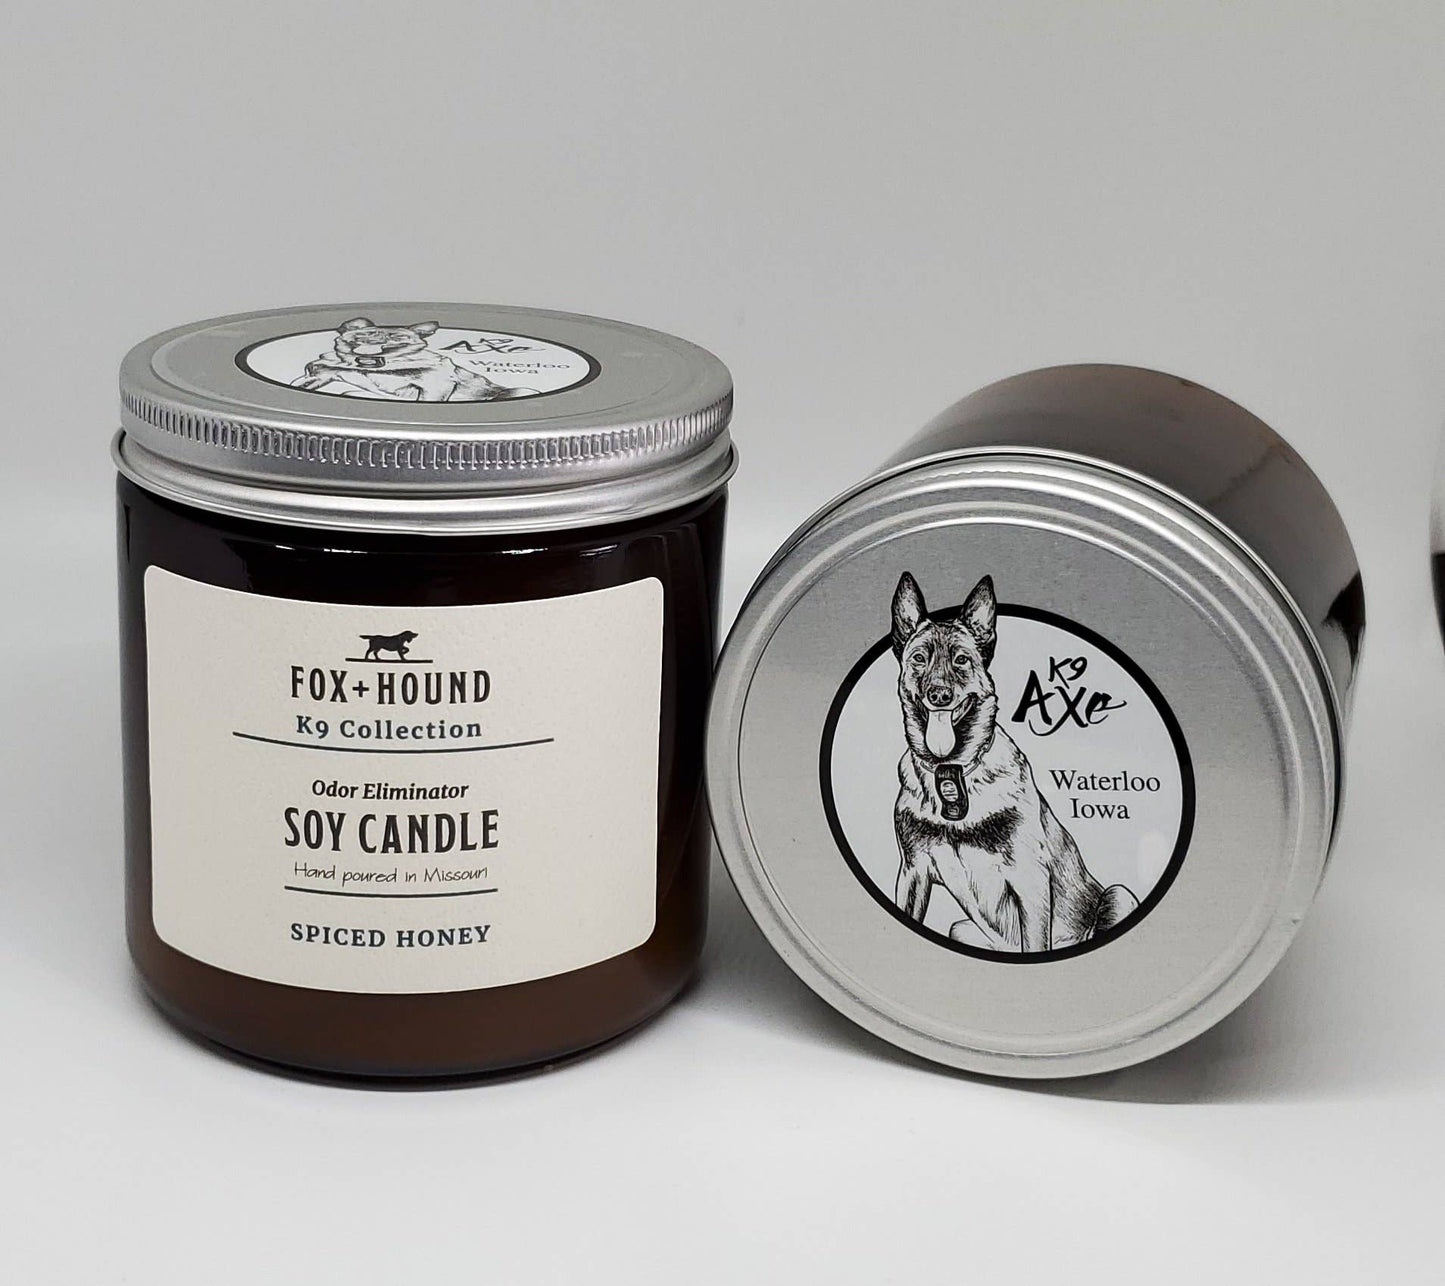 K9 Collection Axe Odor Eliminator Soy Candle Spiced Honey